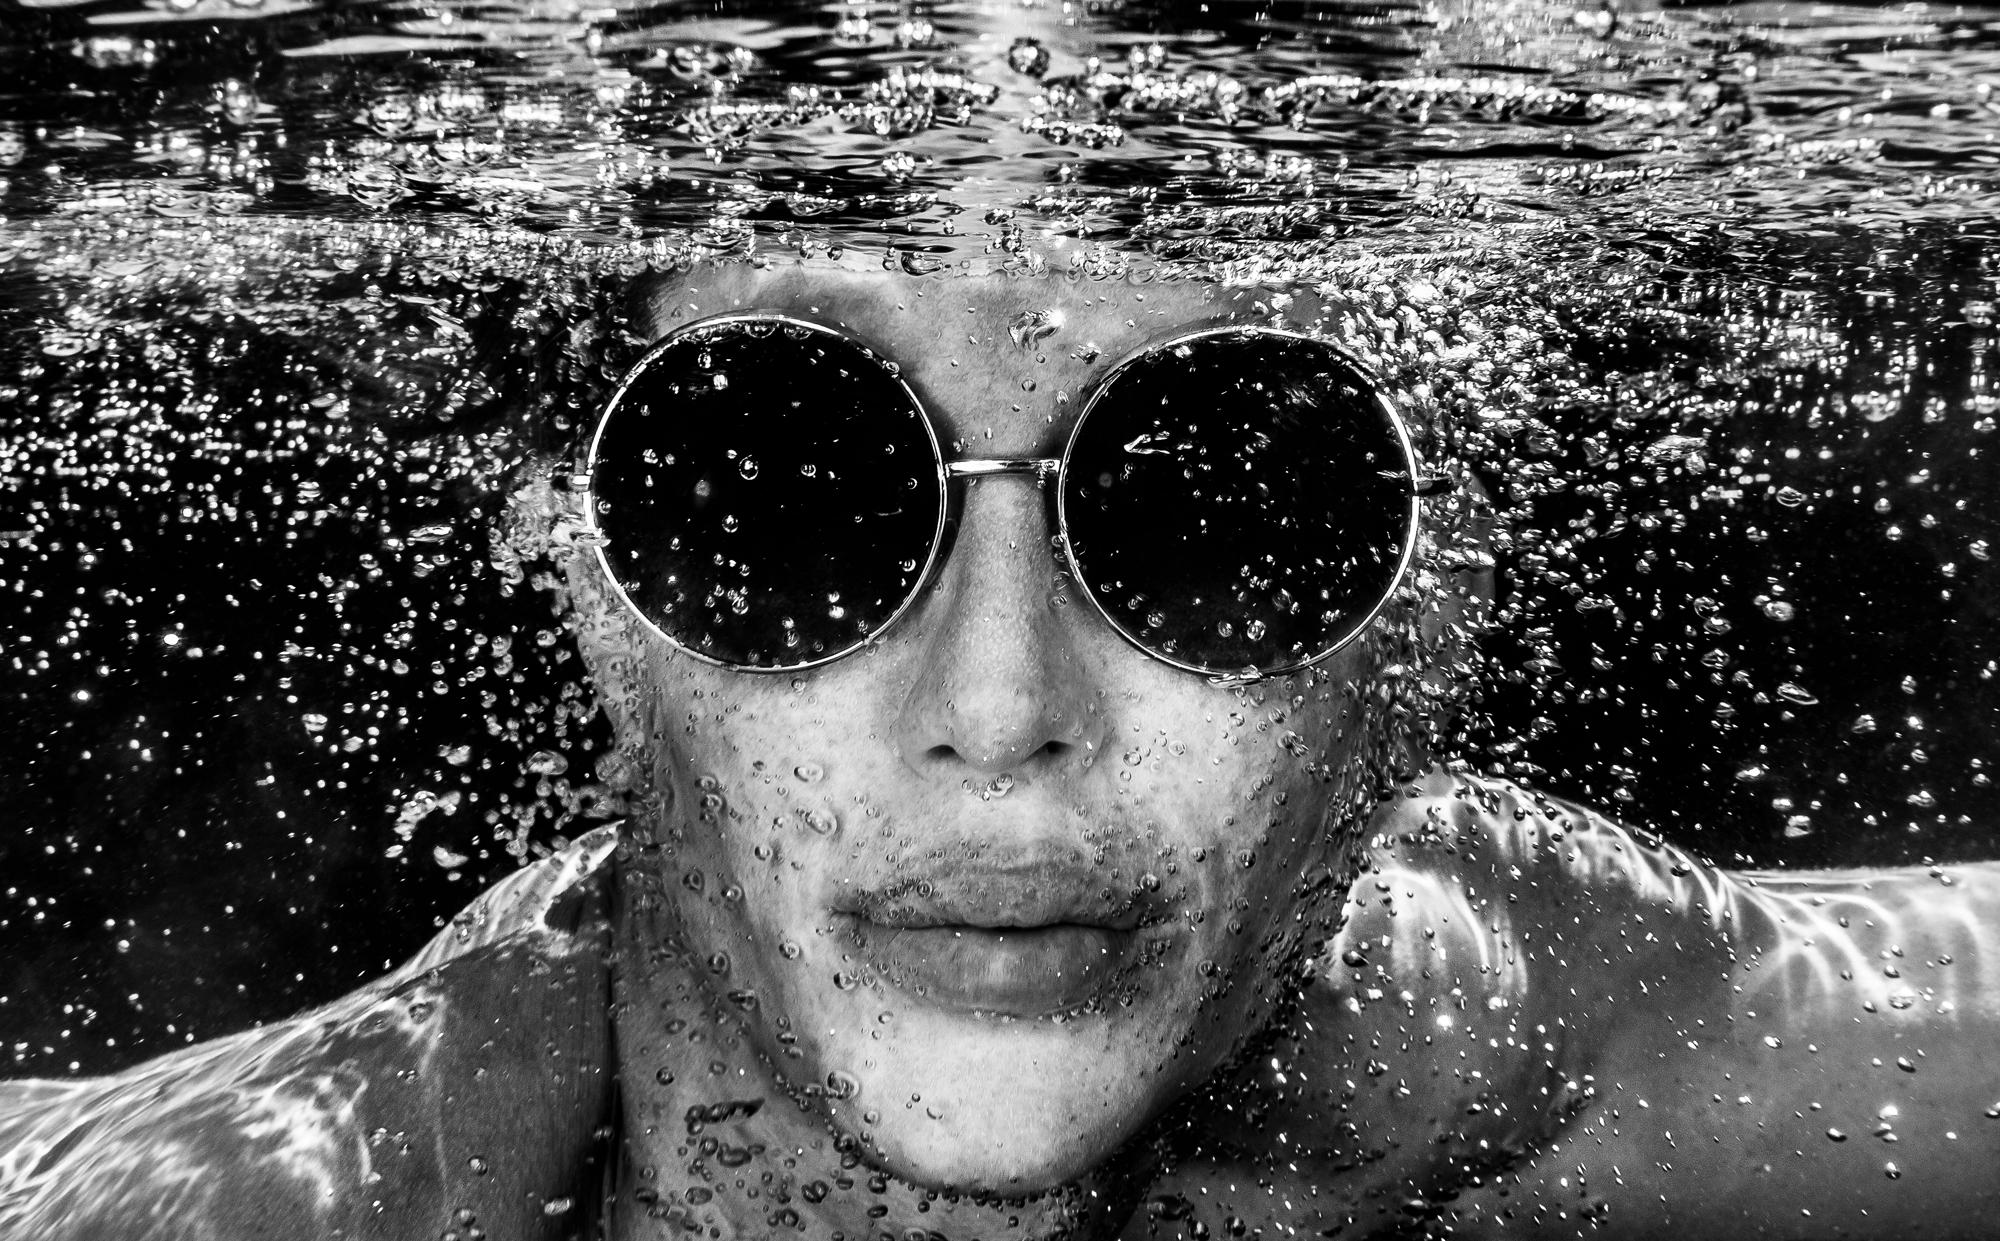 Alex Sher Portrait Photograph - Rounds  - underwater black and white photograph - archival pigment print 35x56"